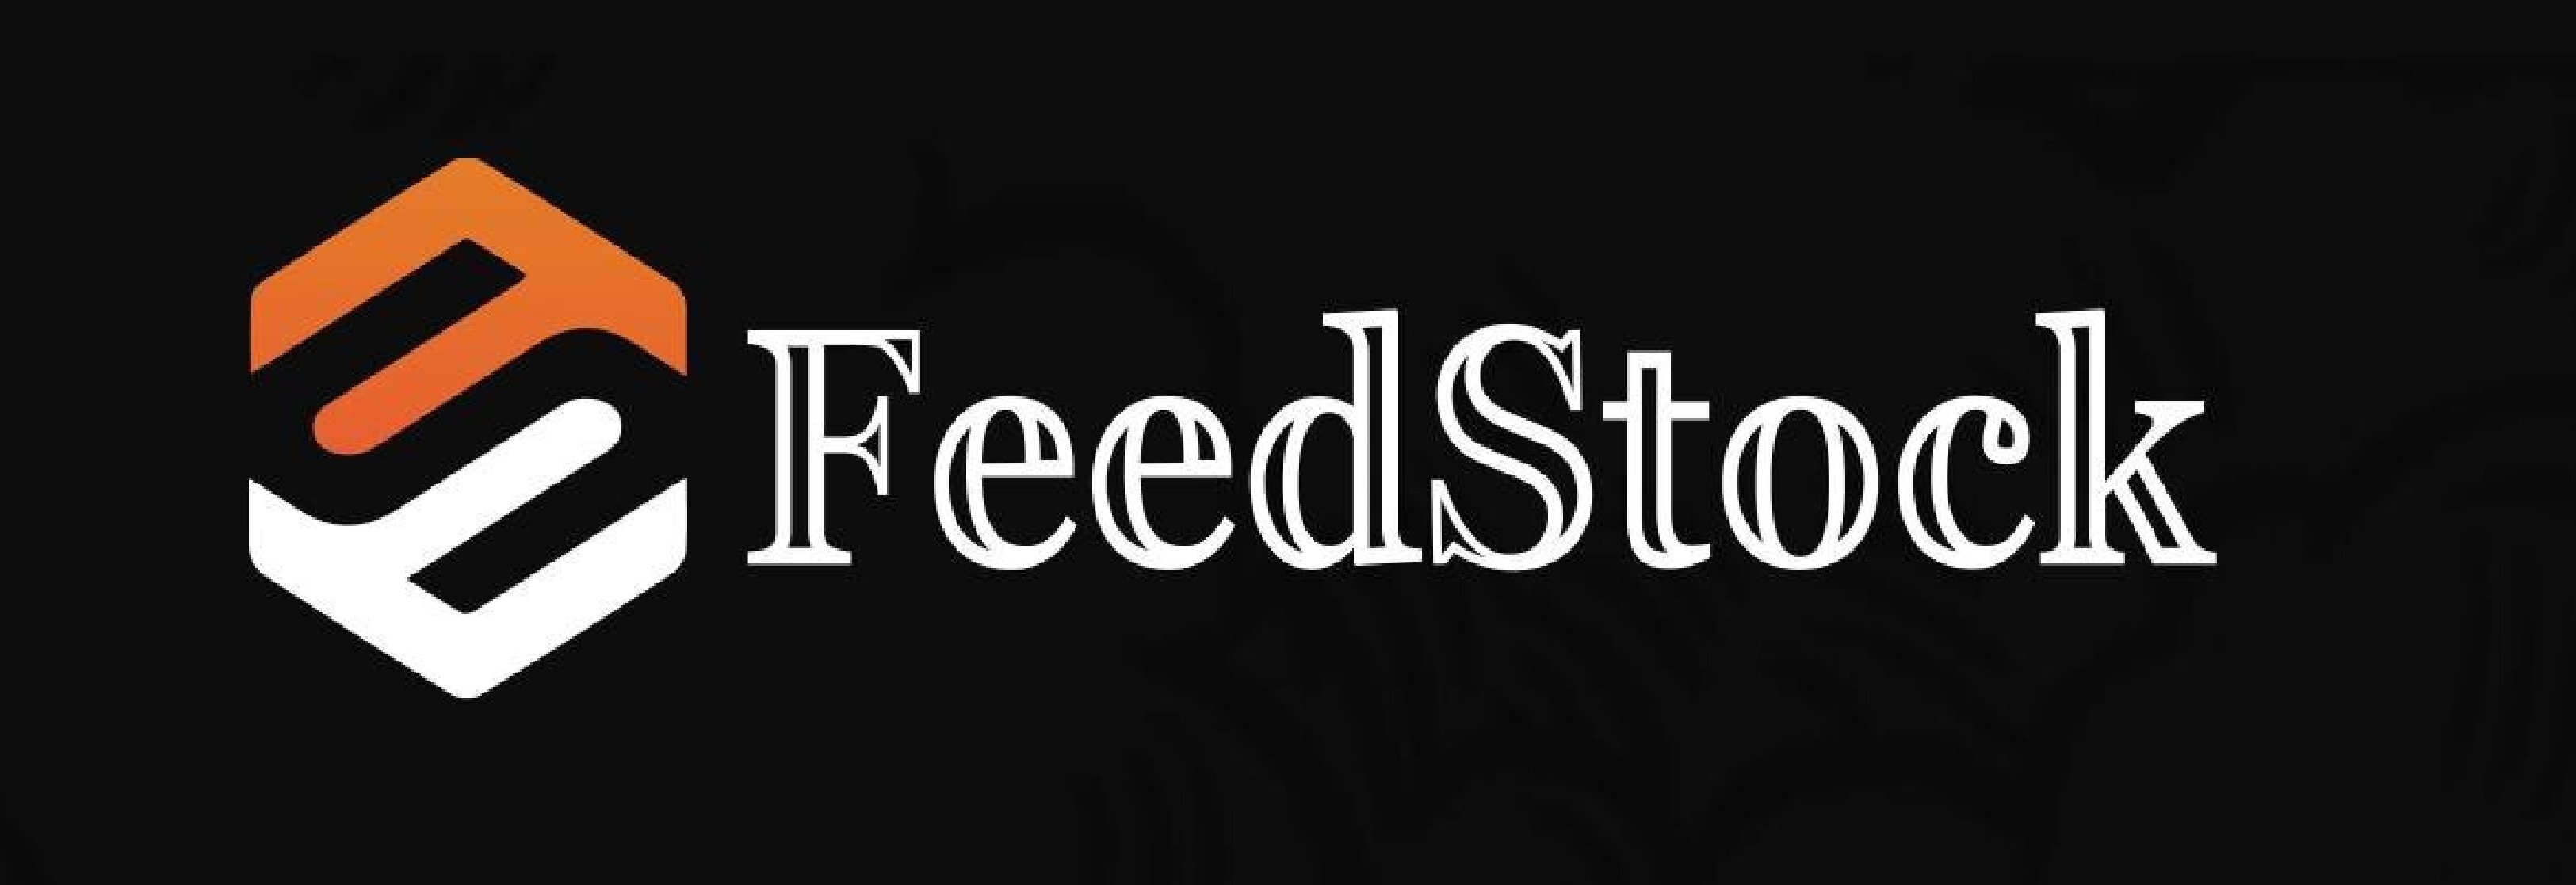 FEED STOCK Логотип(logo)